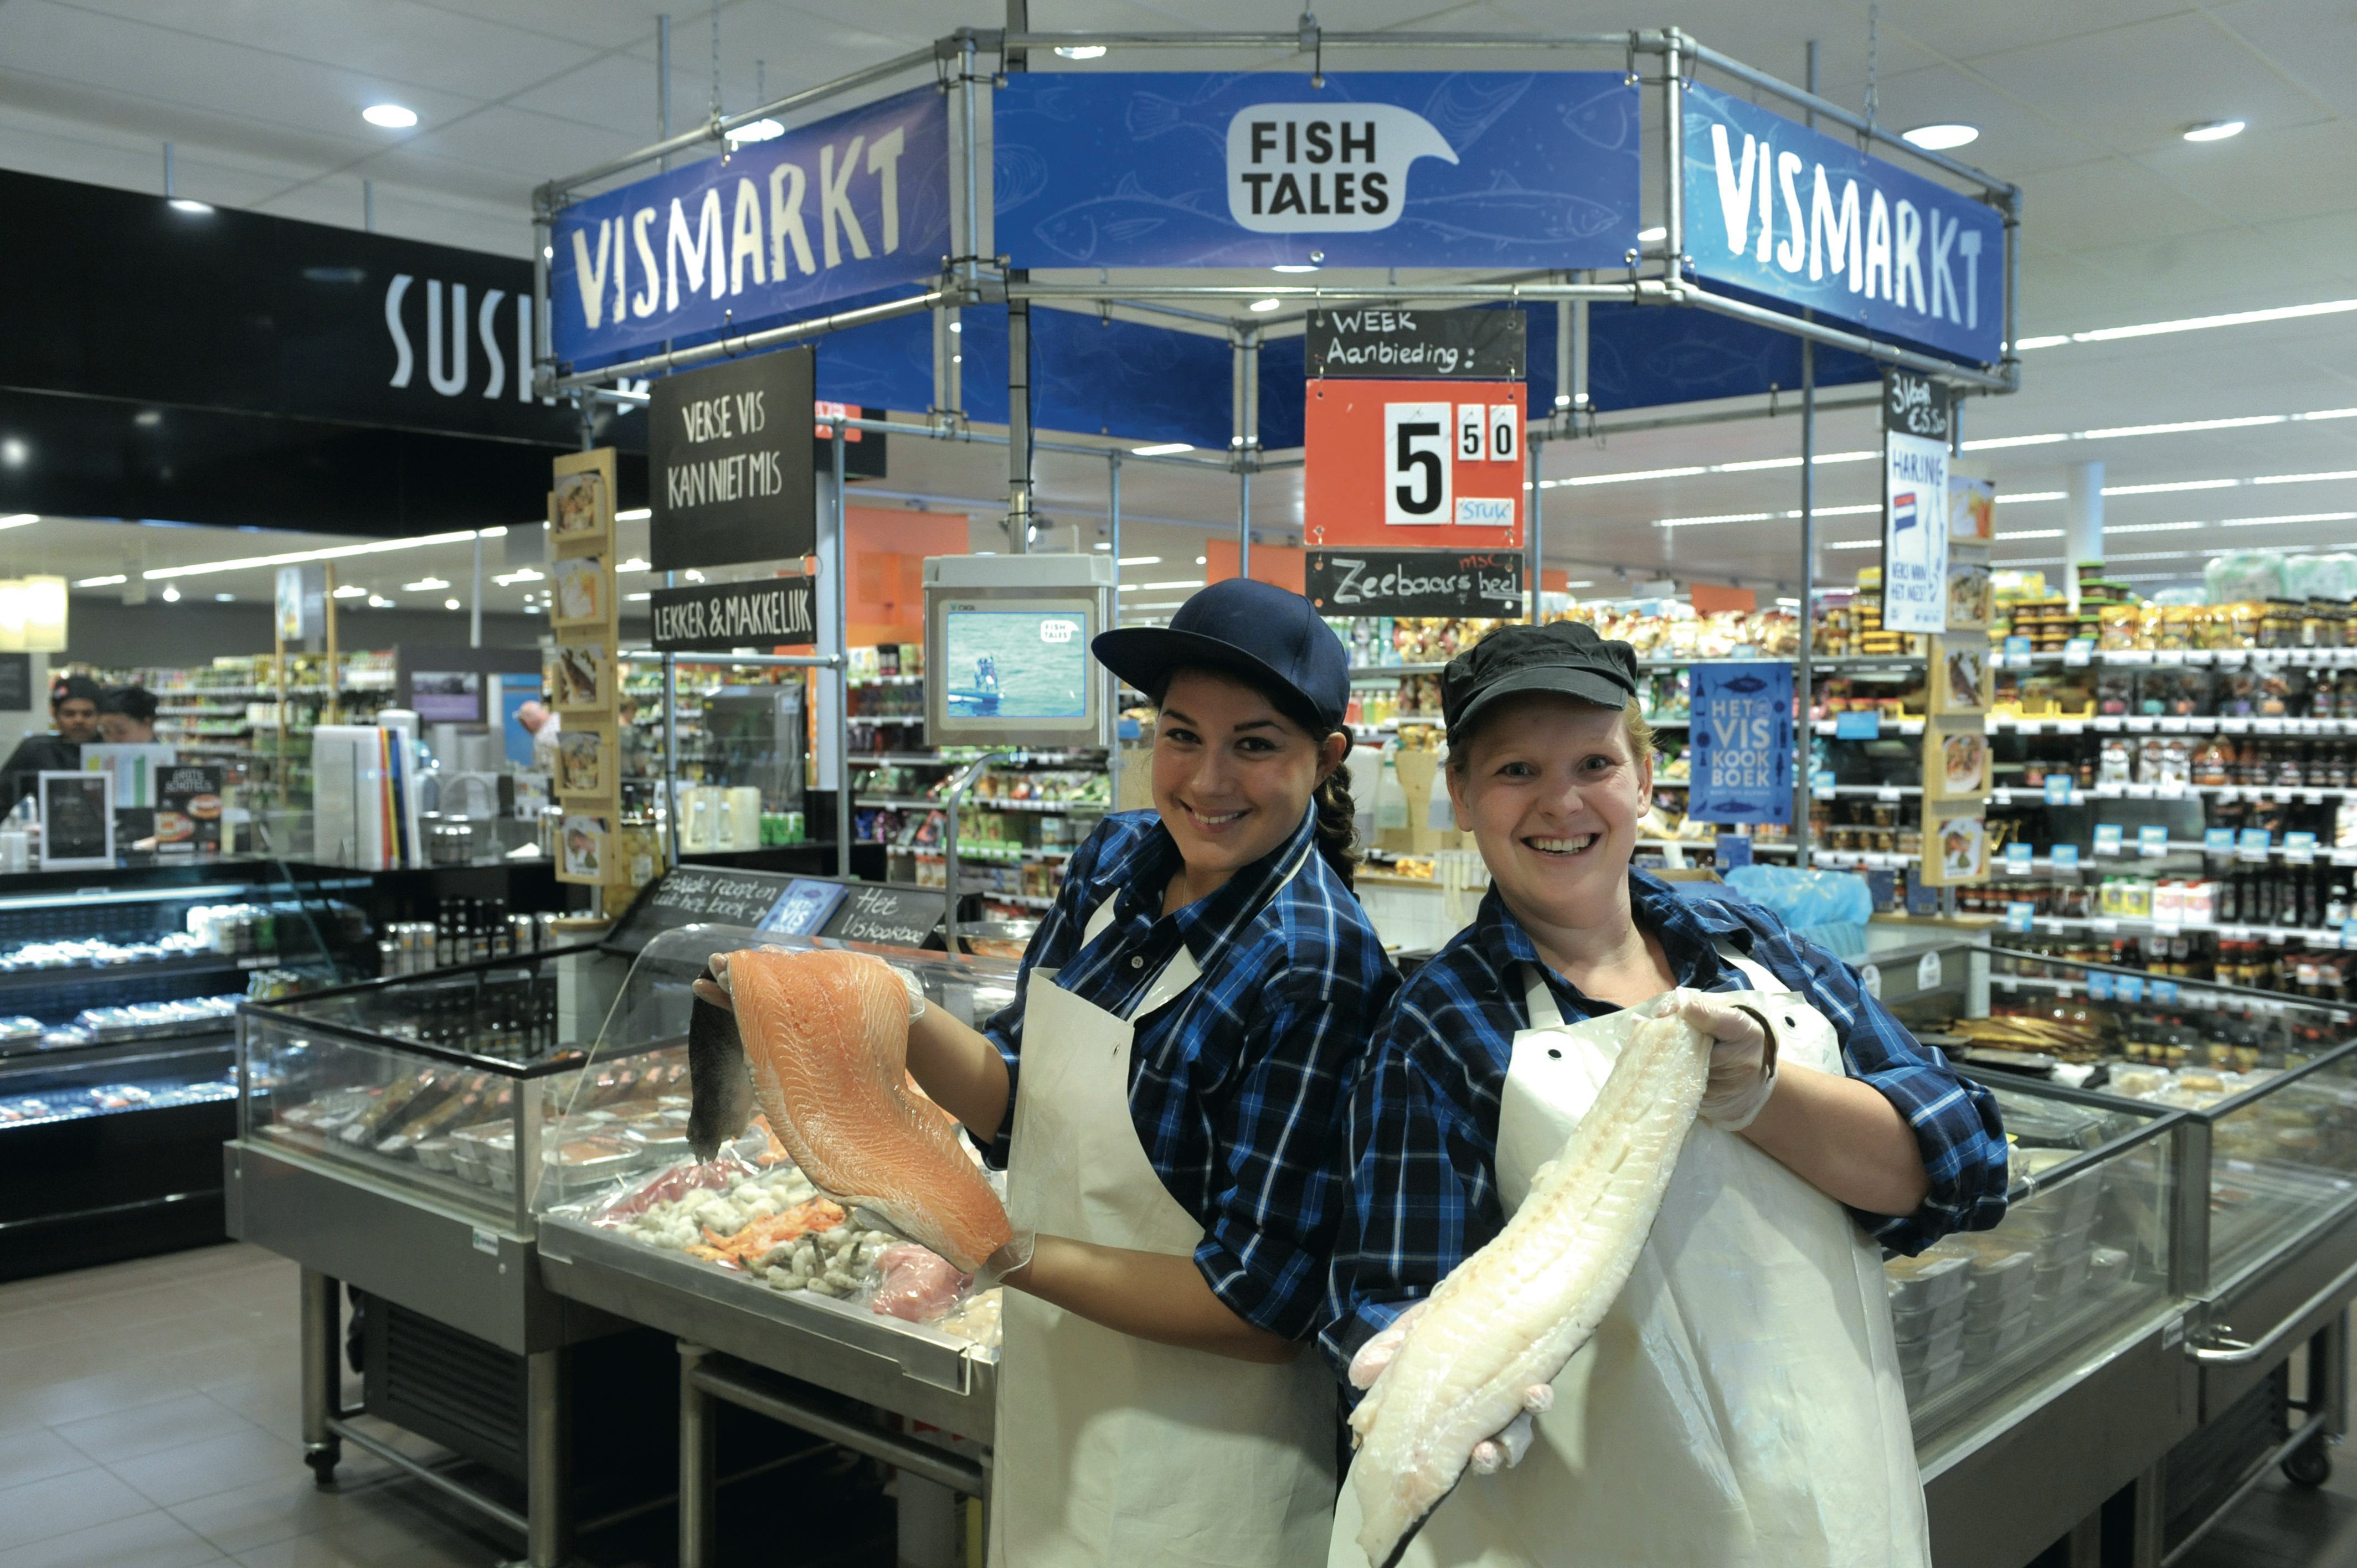 Fish Tales viswinkel, shop in shop in AH supermarkt.